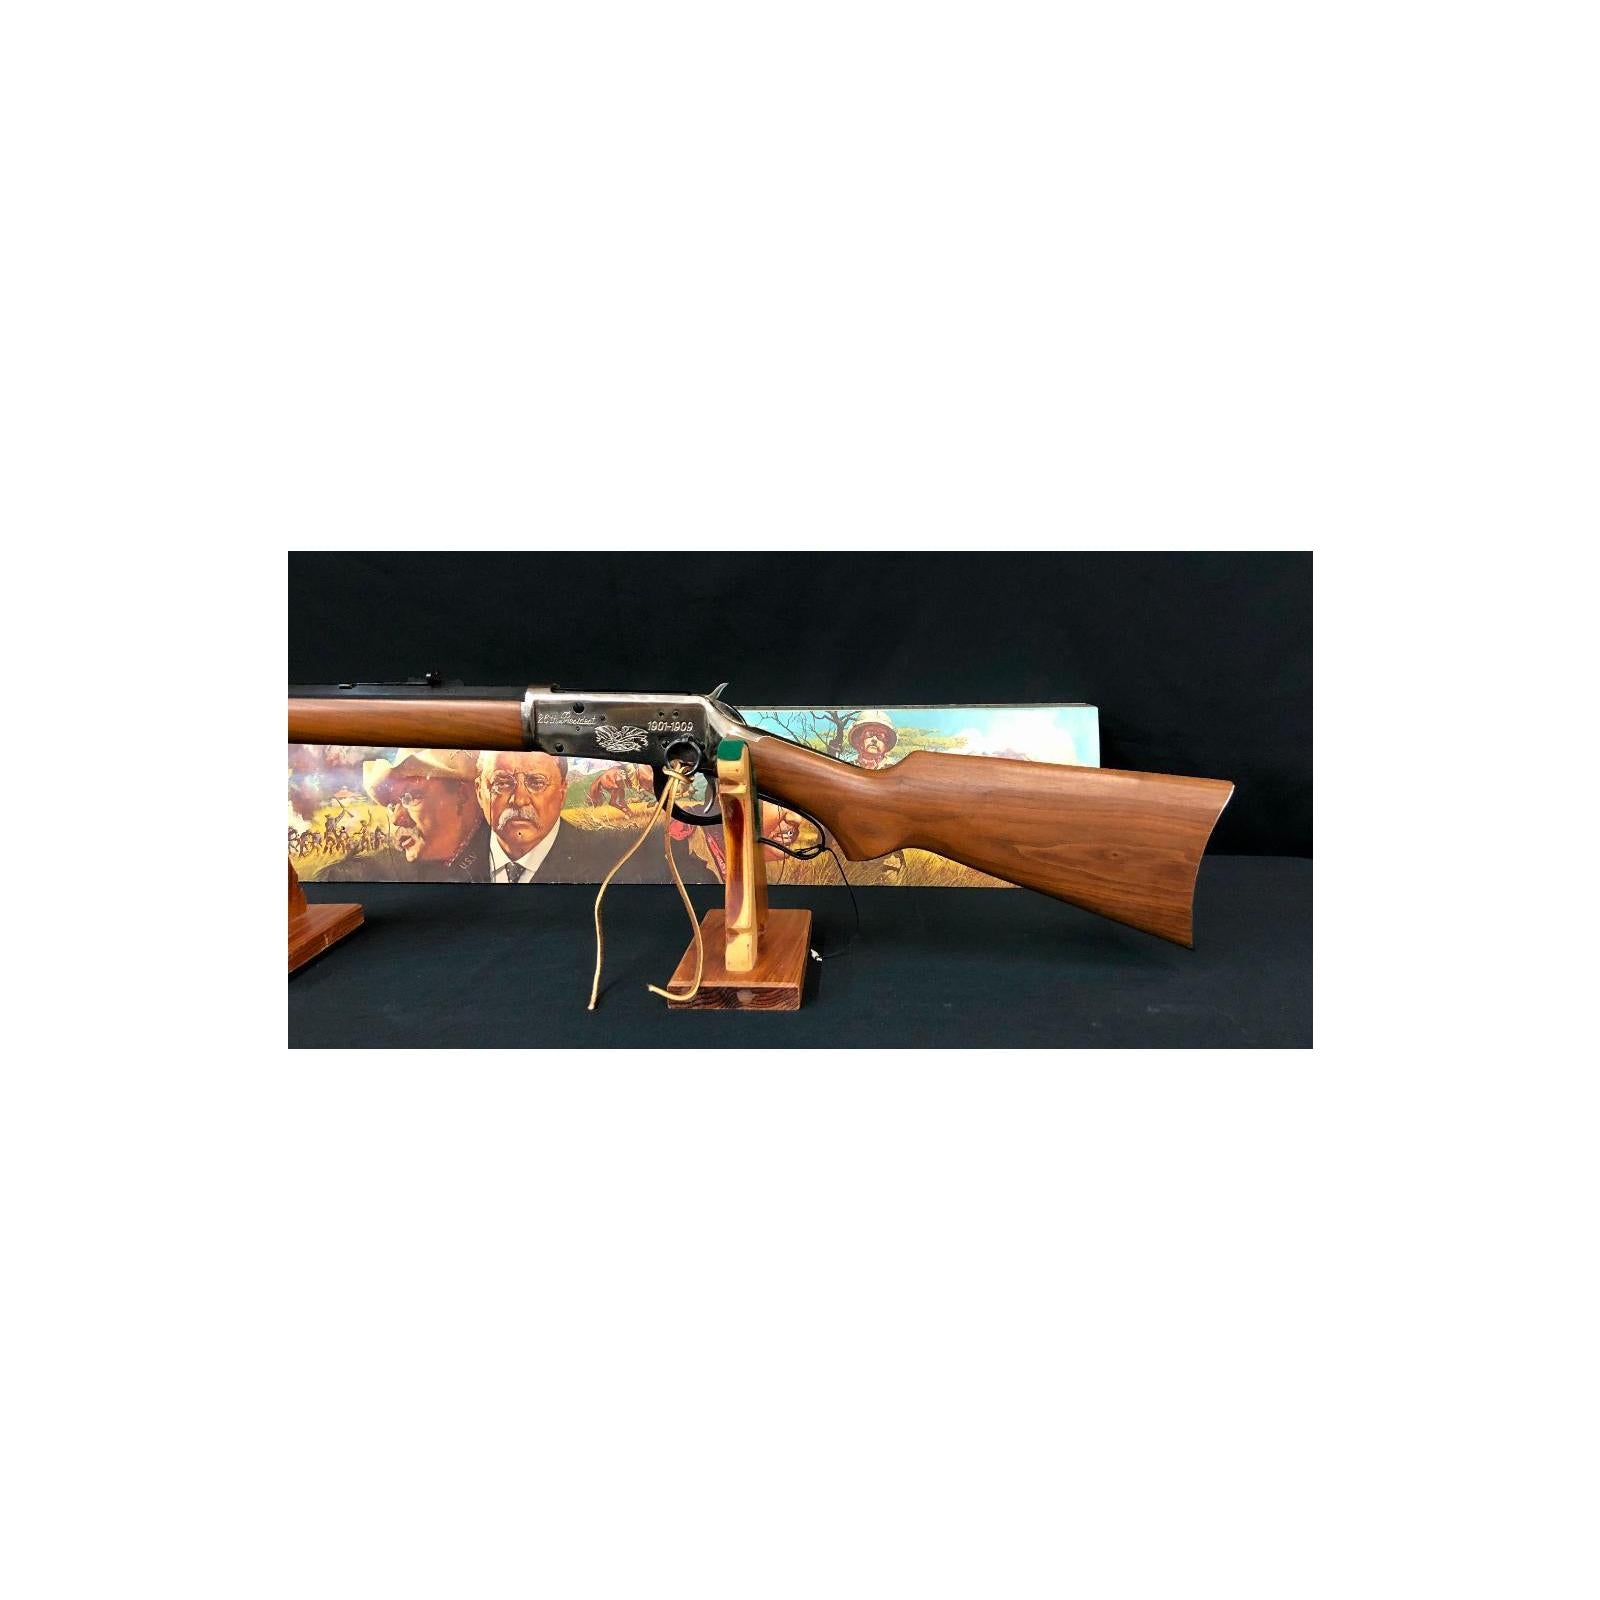 SALE SALE - Winchester Model 94 Teddy Roosevelt Commemorative Rifle with Original Box